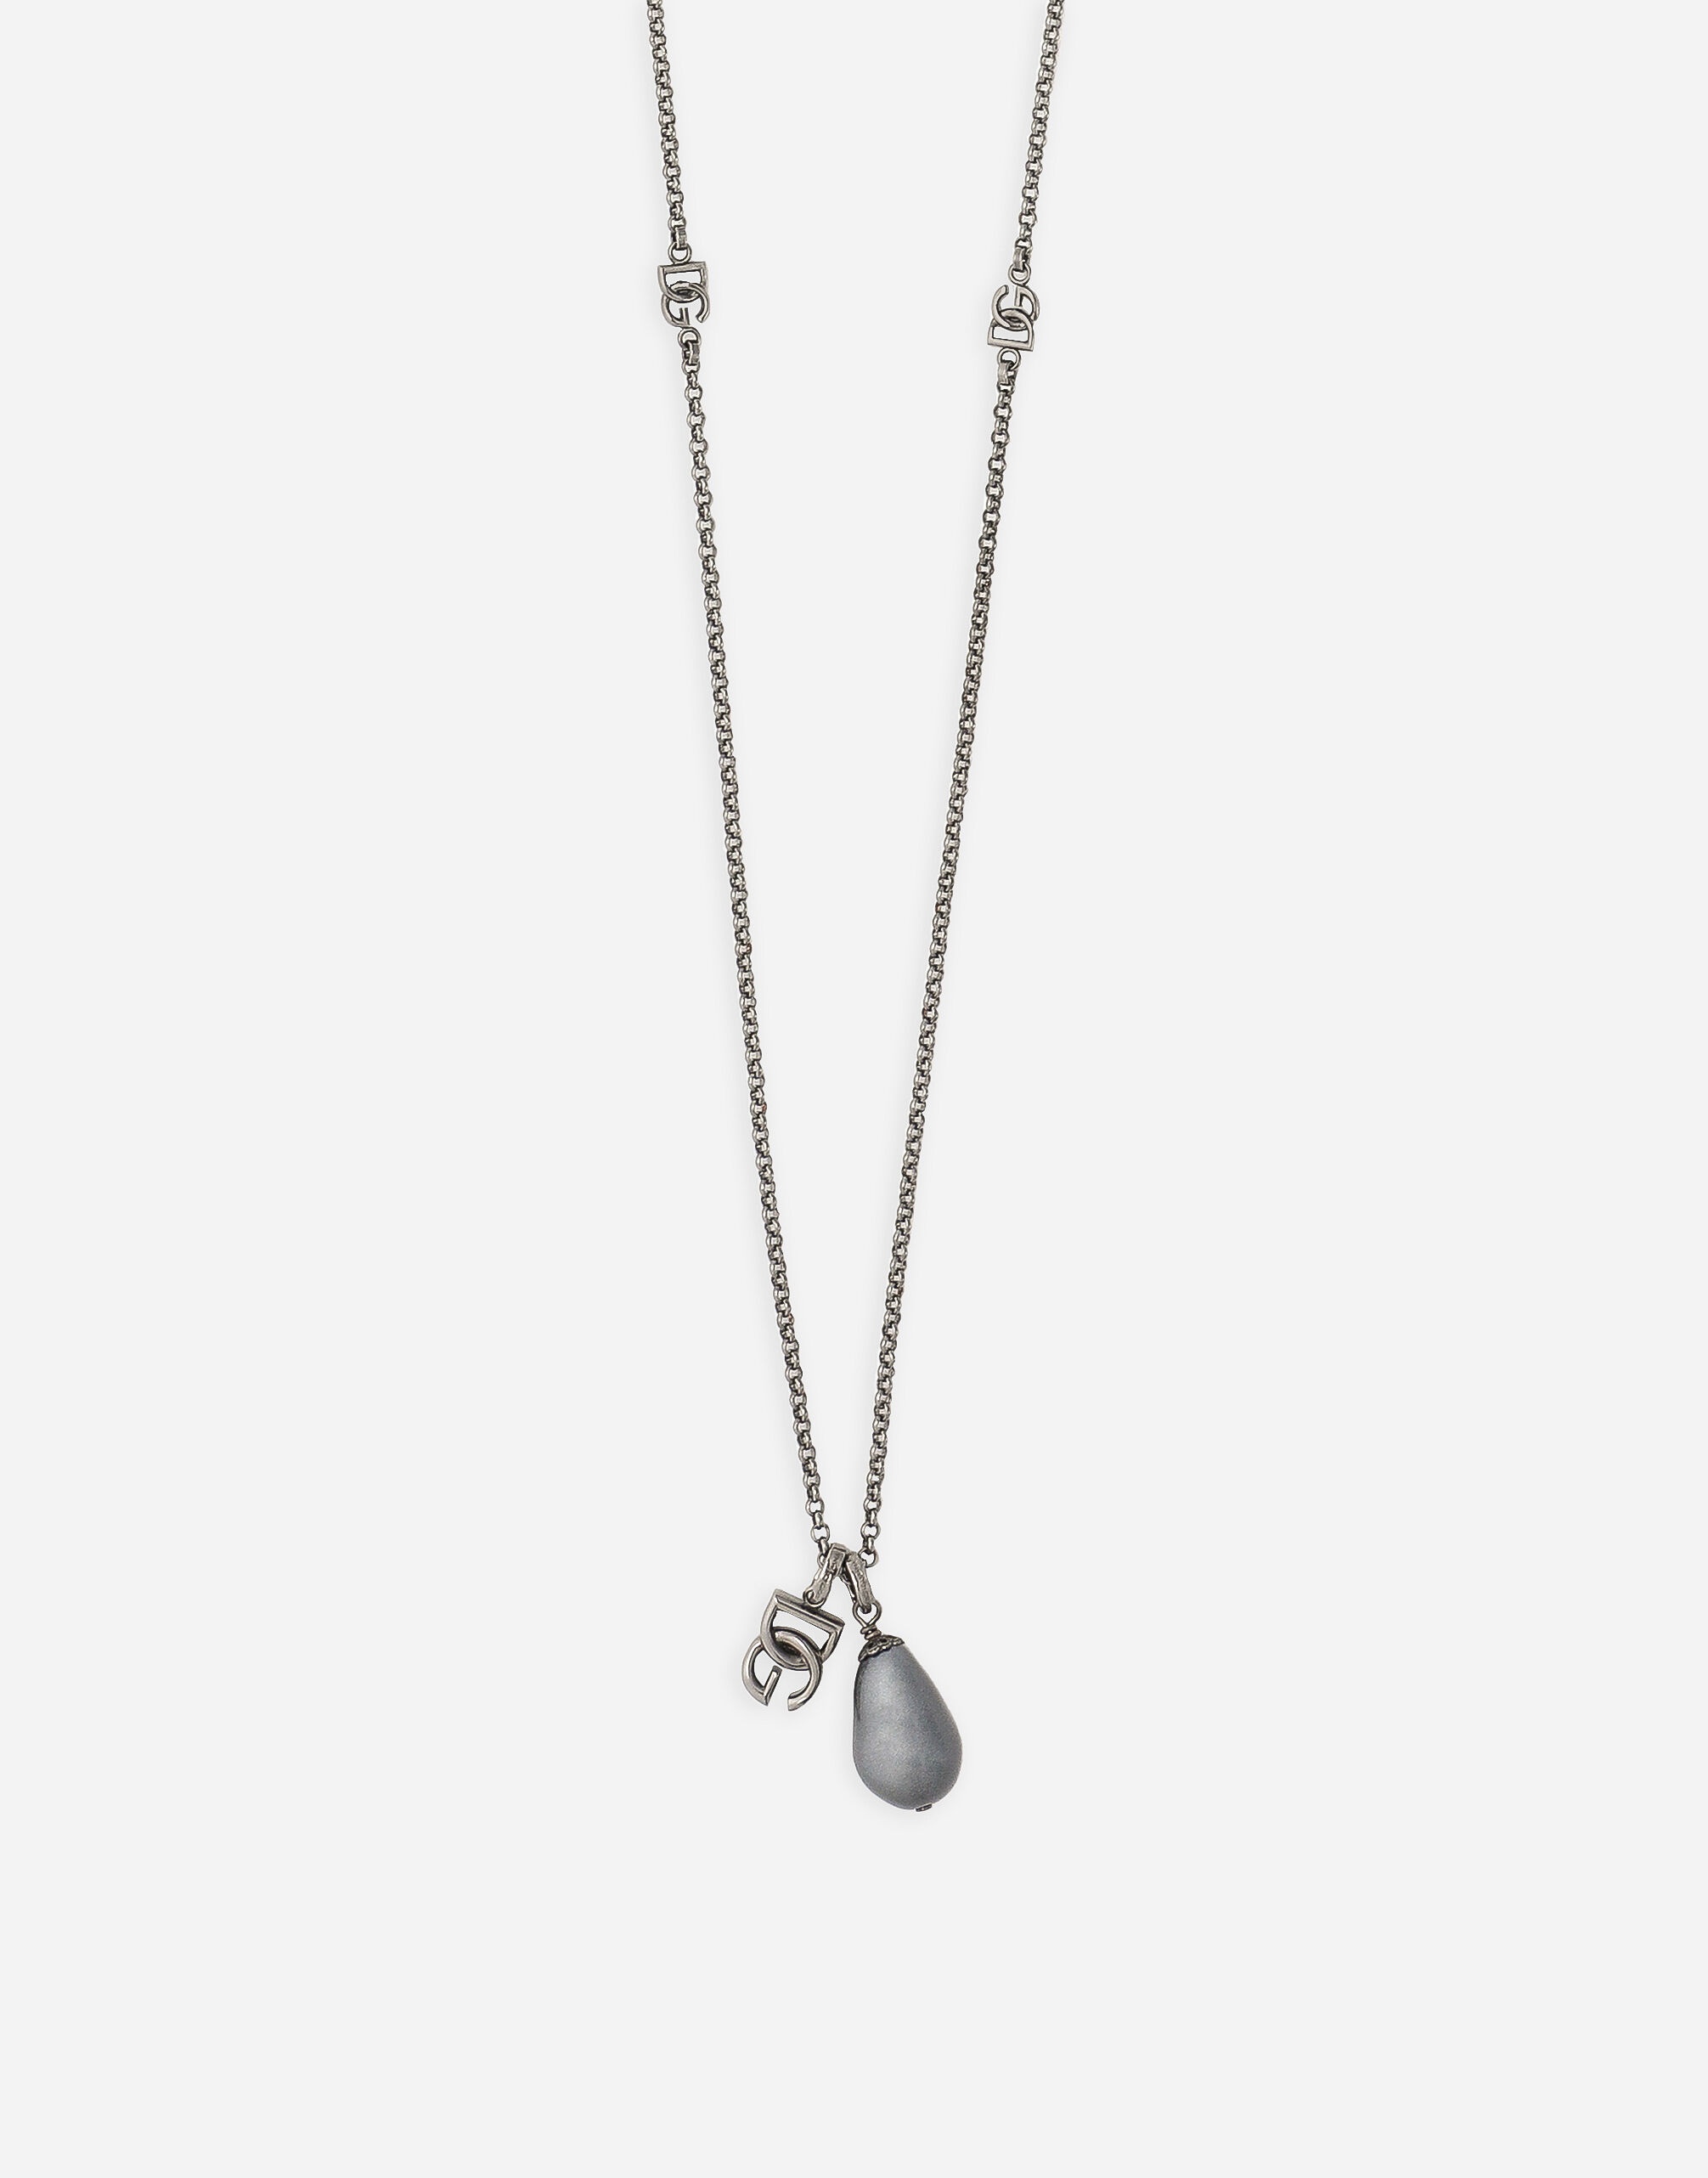 Teardrop necklace with DG logo - 3